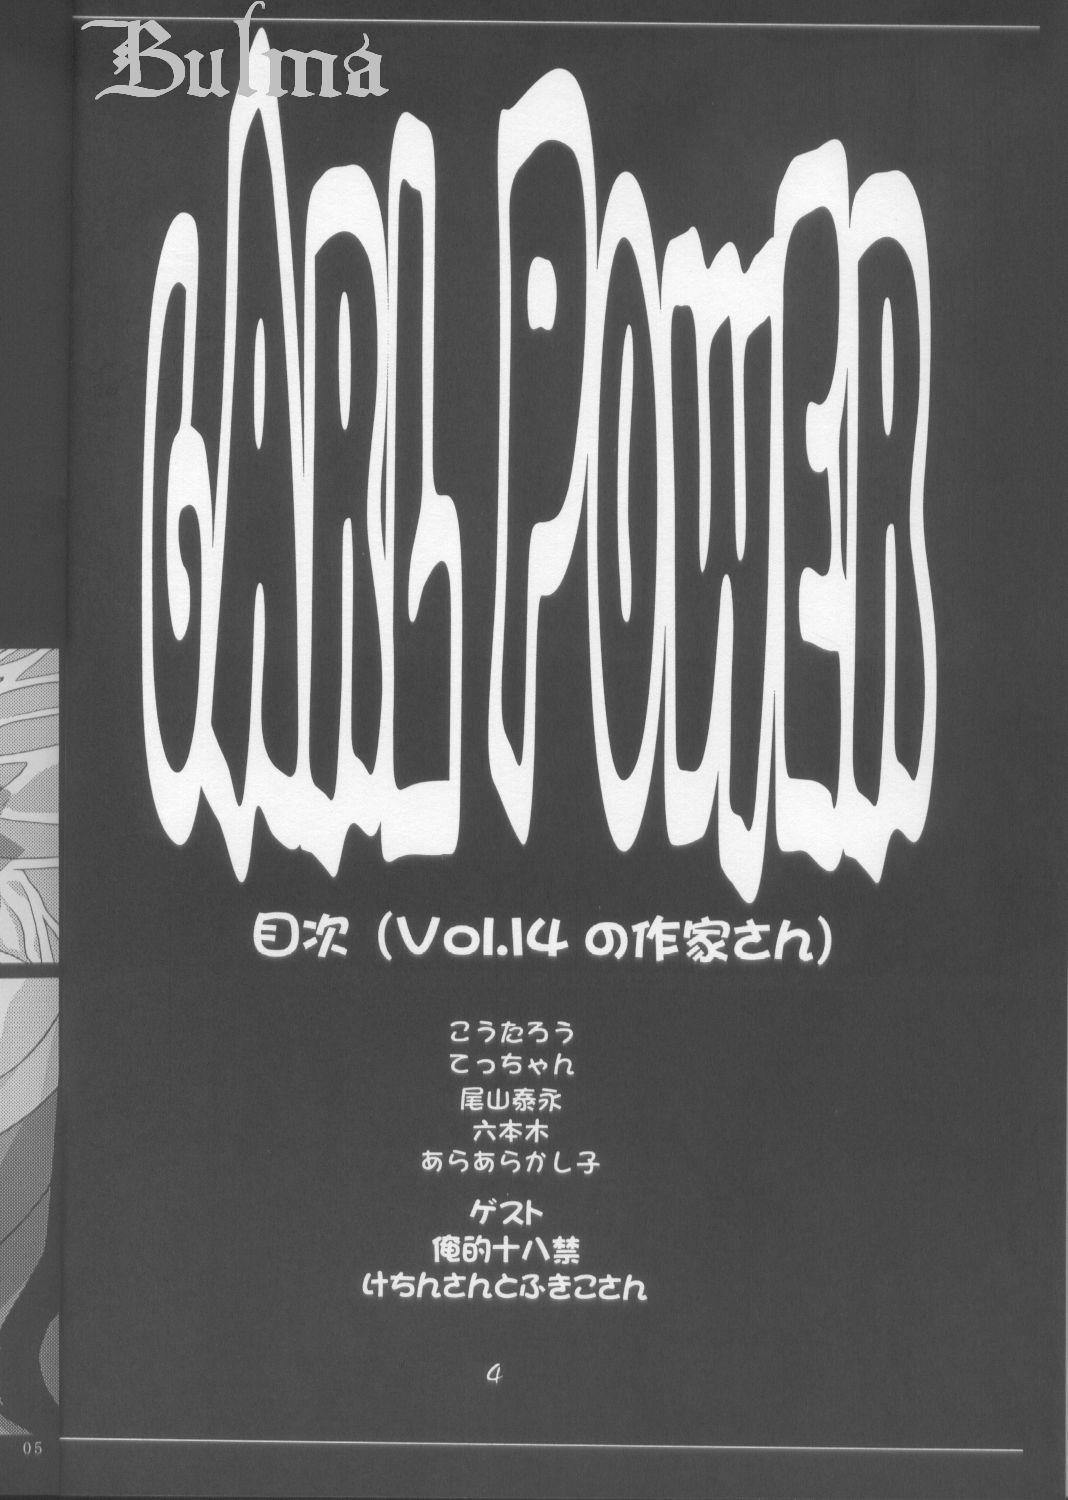 GIRL POWER Vol.14 3